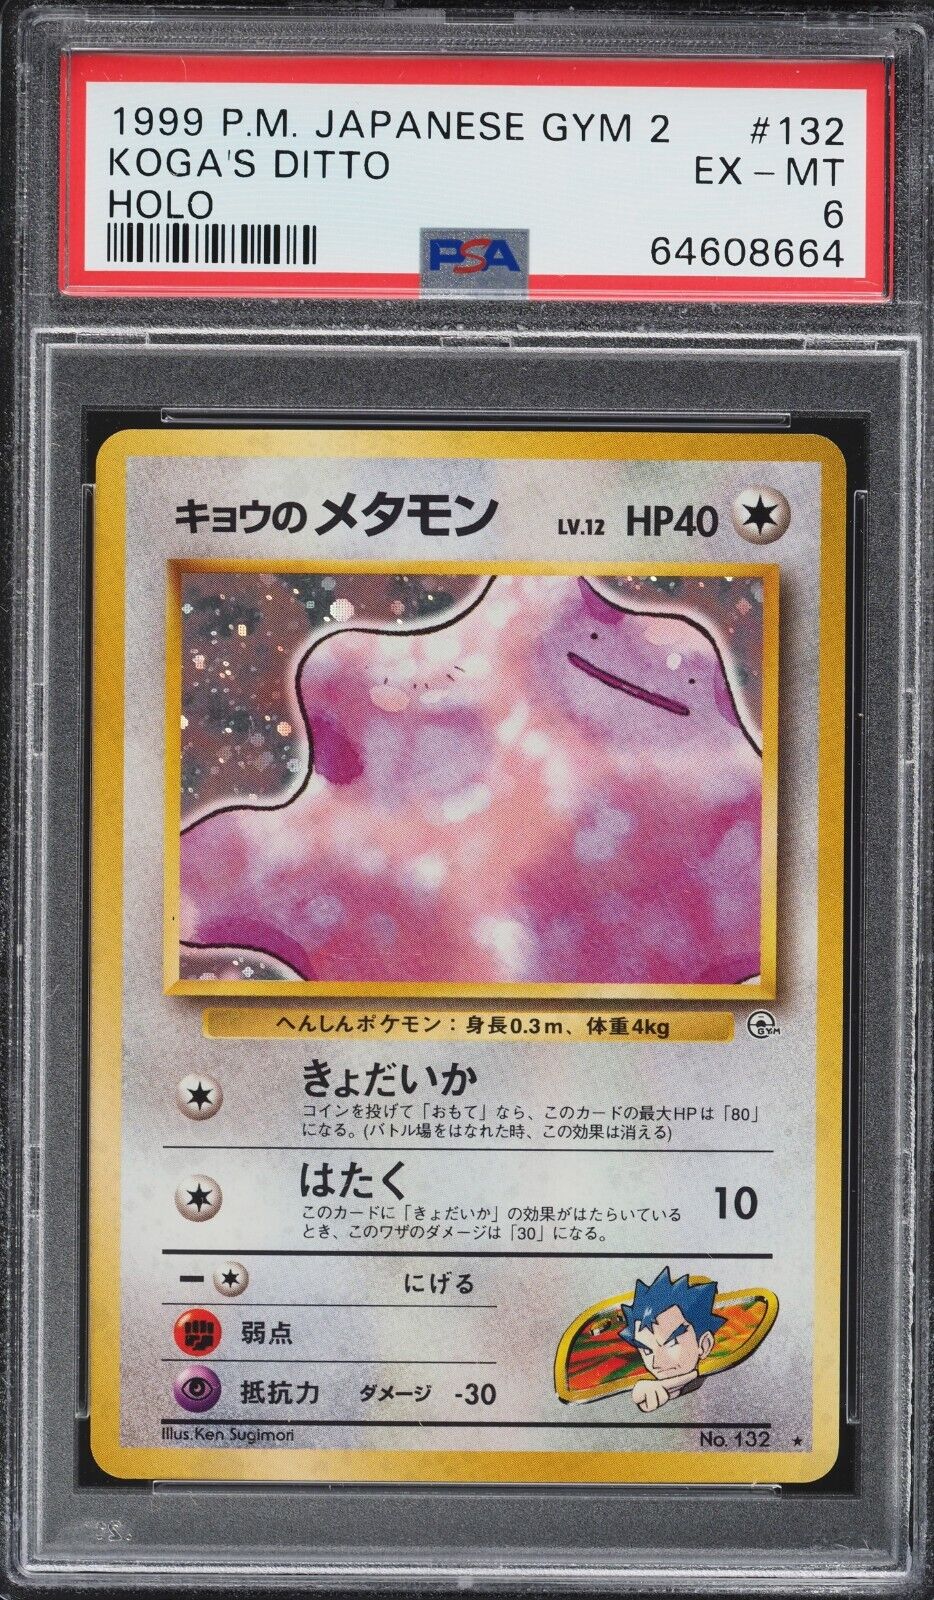 Pokemon Card - Koga\'s Ditto - #132 - Gym 2 Japanese - PSA 6 Holo